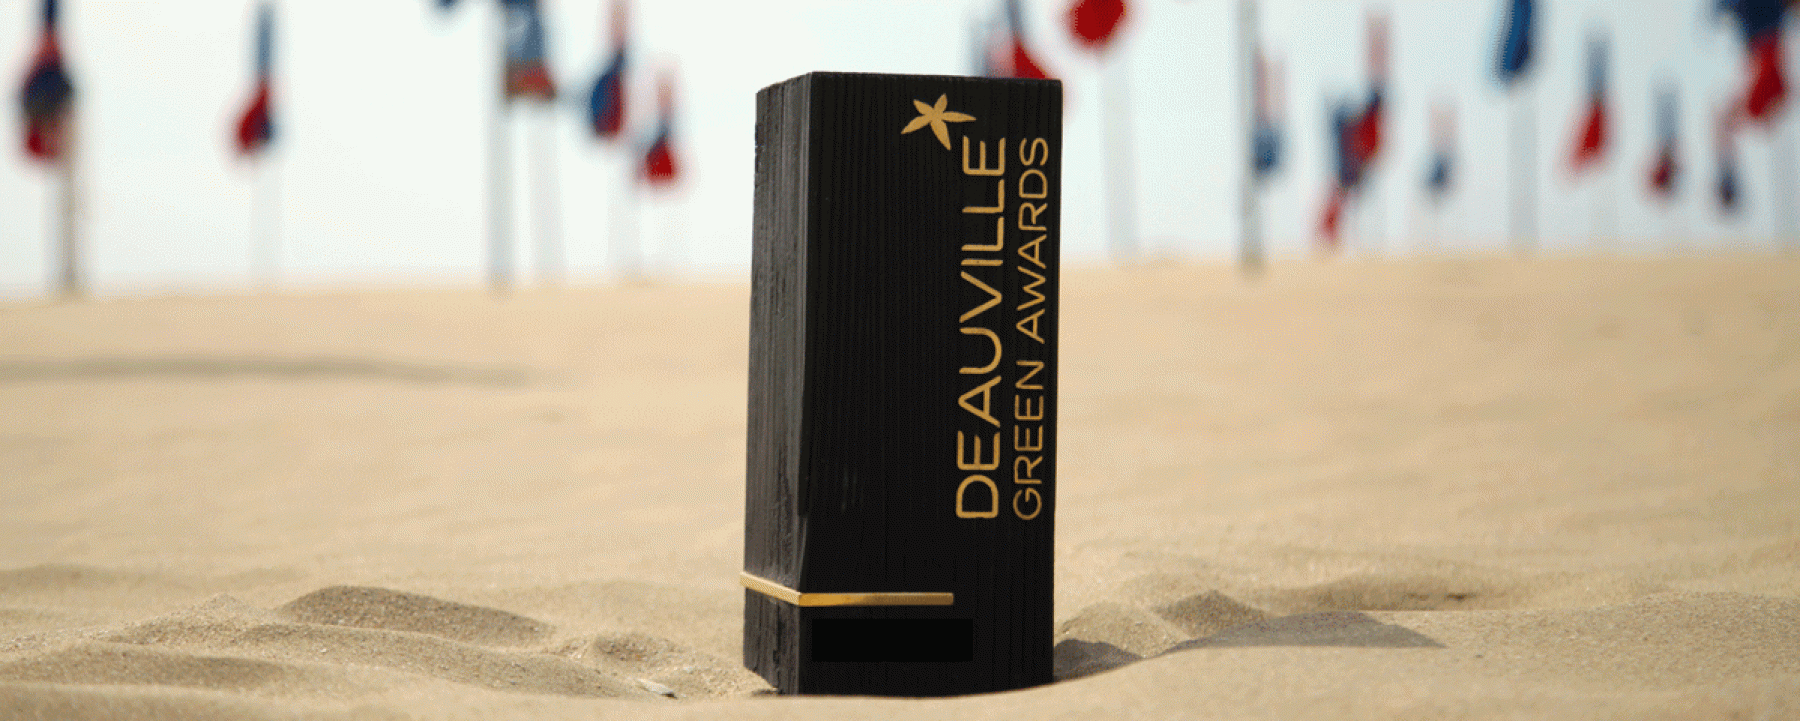 Deauville Green Awards 2020